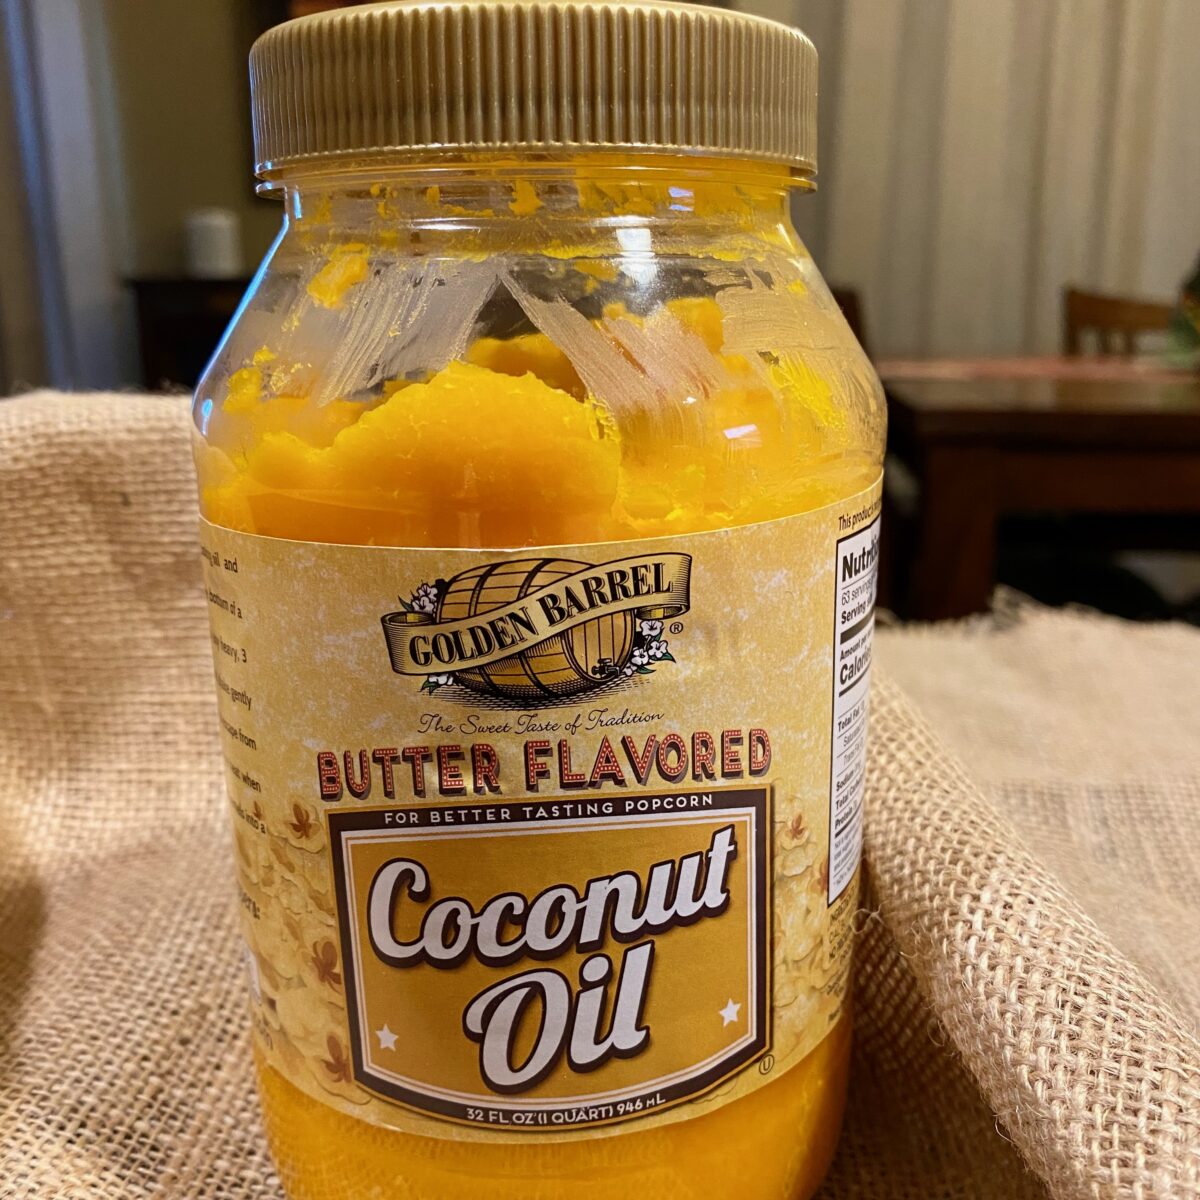 The butter-flavored coconut oil I use, Golden Barrel.